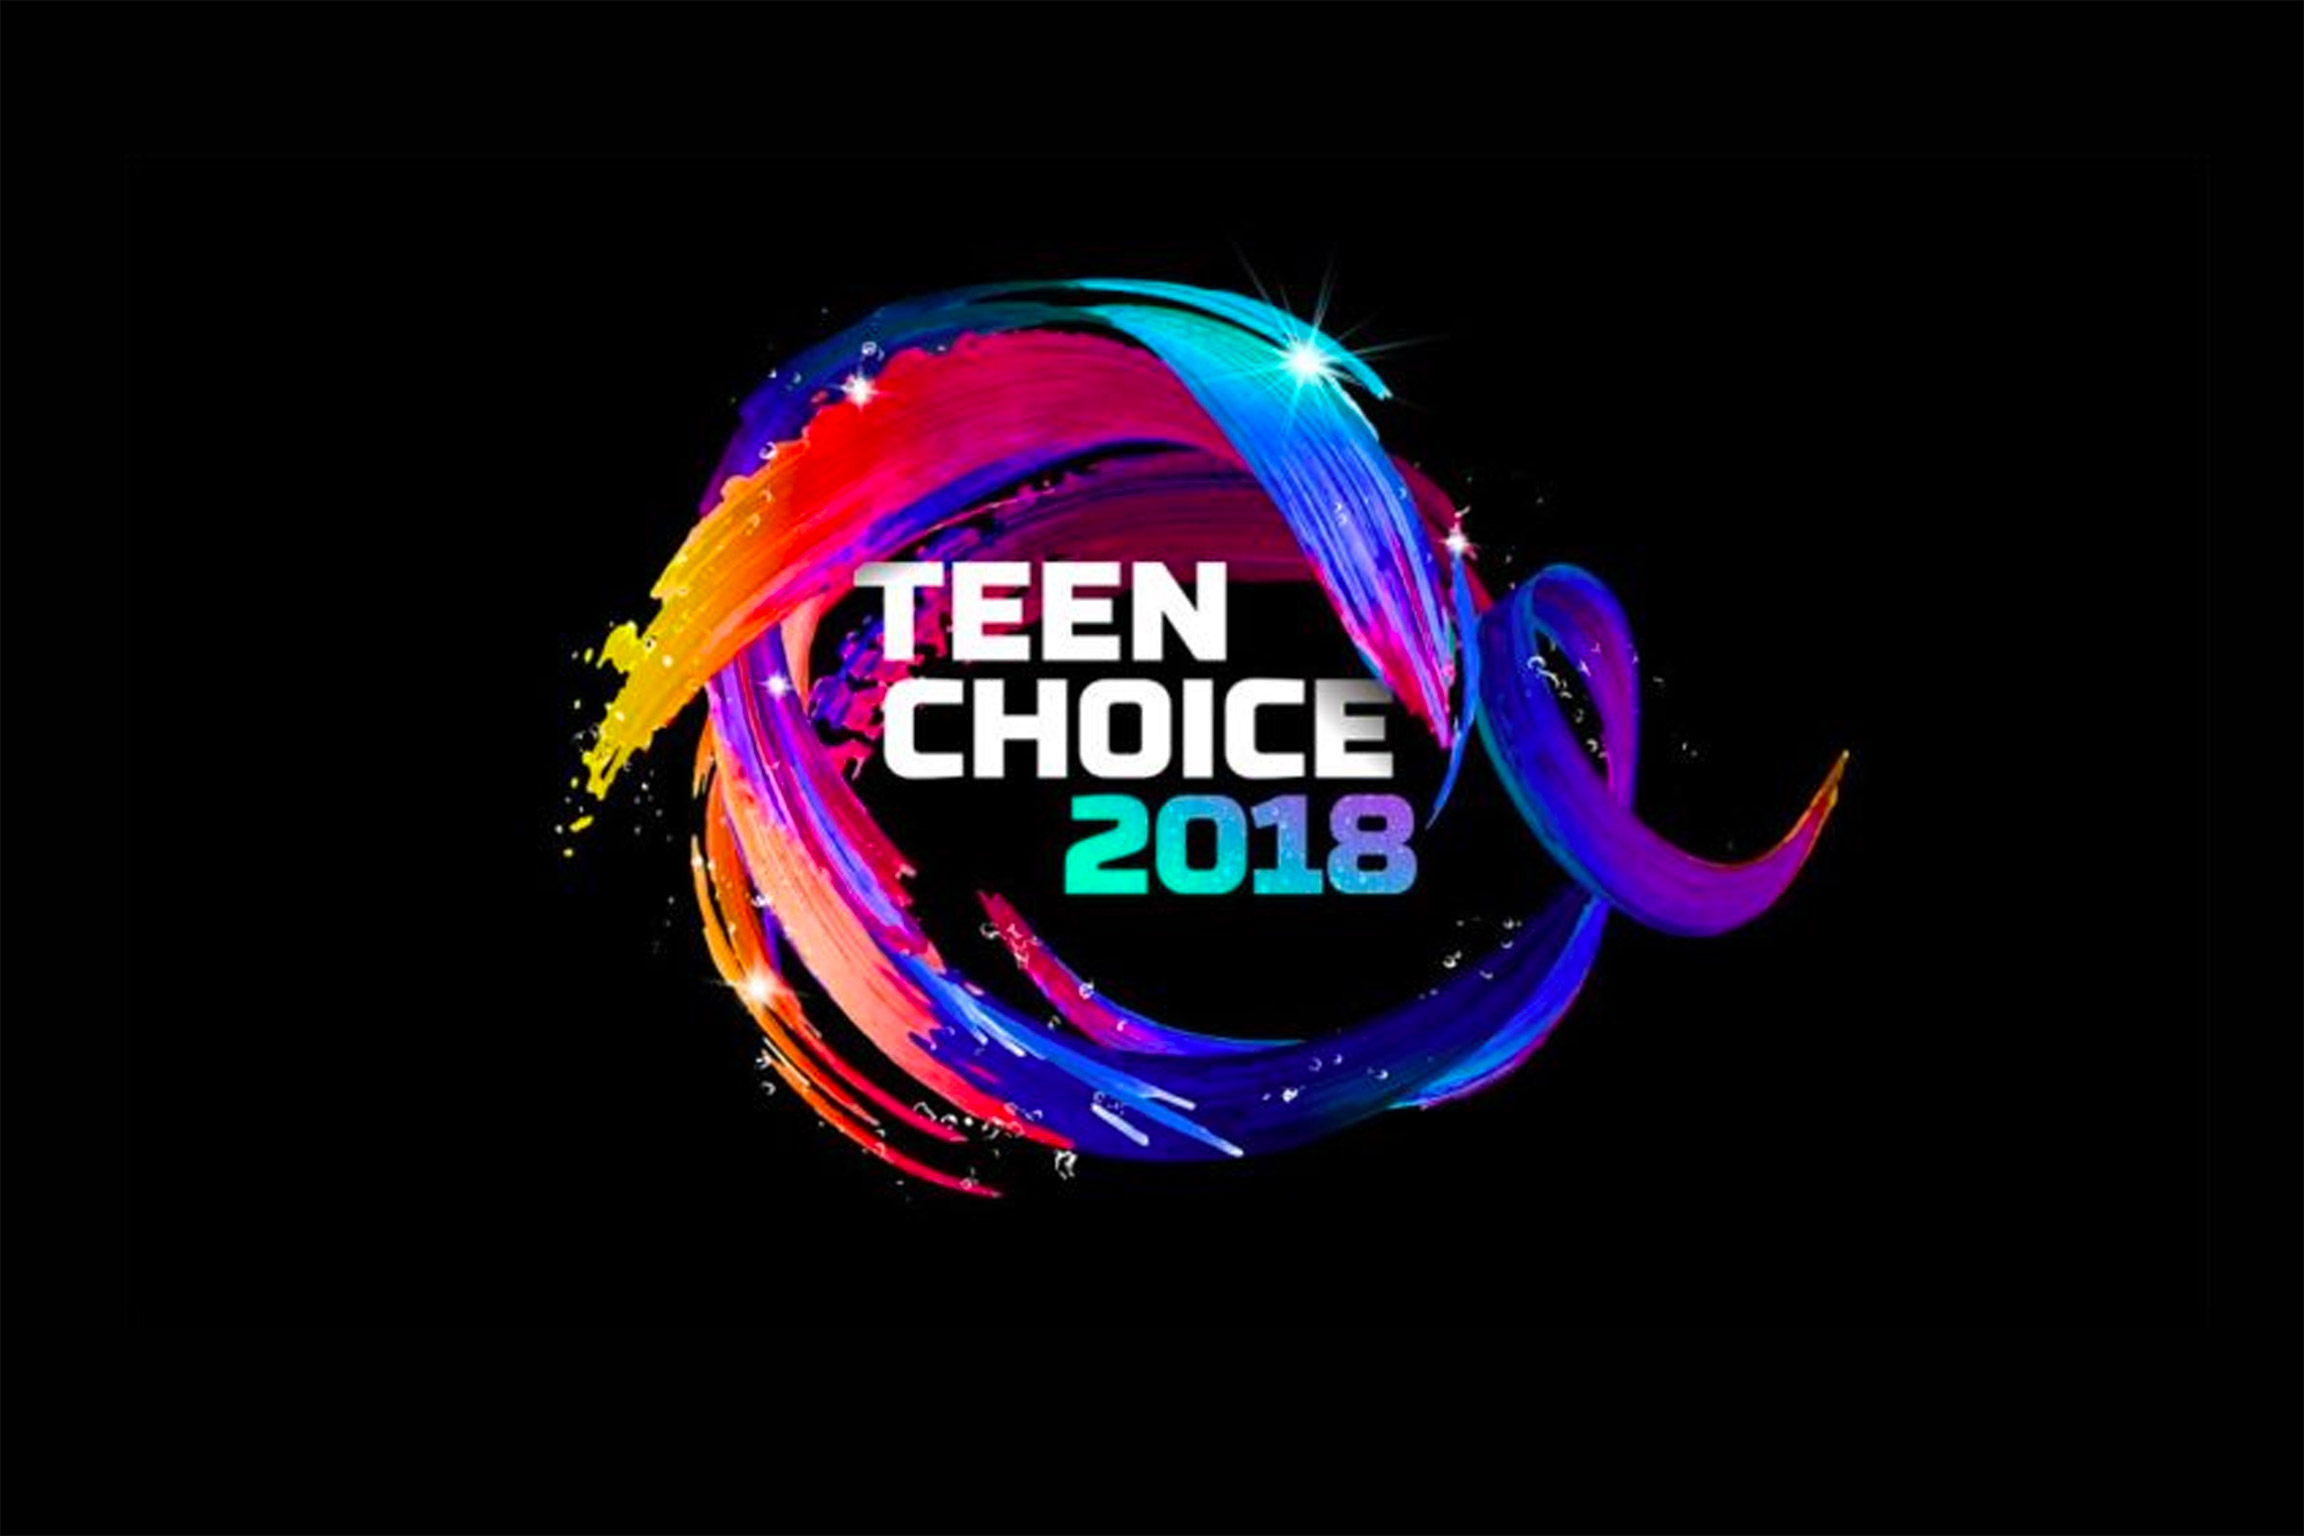 Teen choice 2018 logo